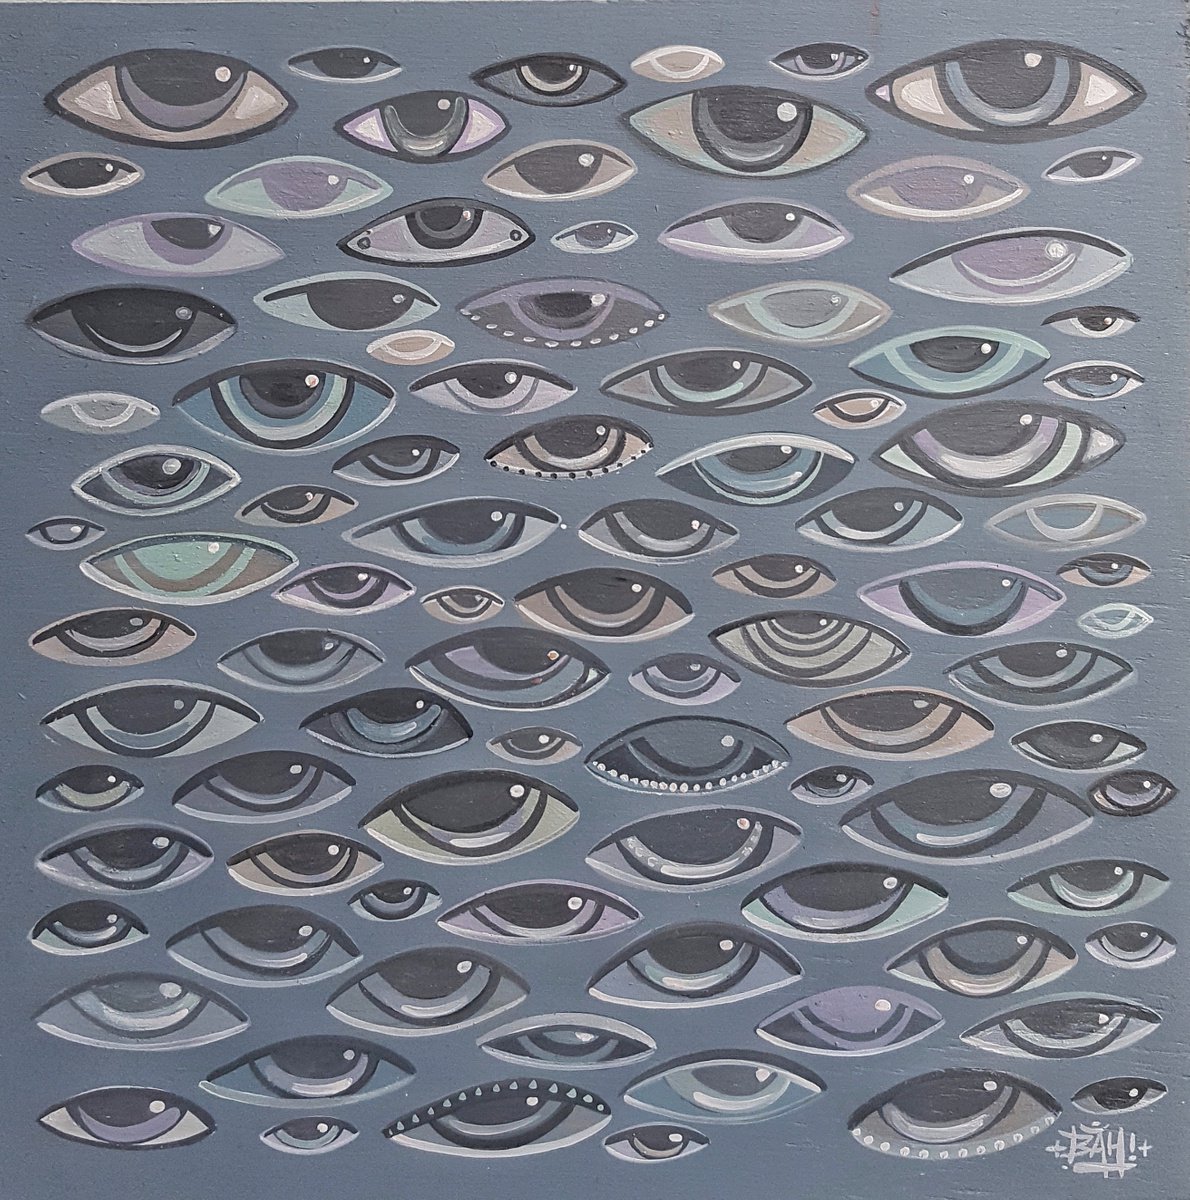 Eyes by Alexia Bahar Karabenli Yilmaz